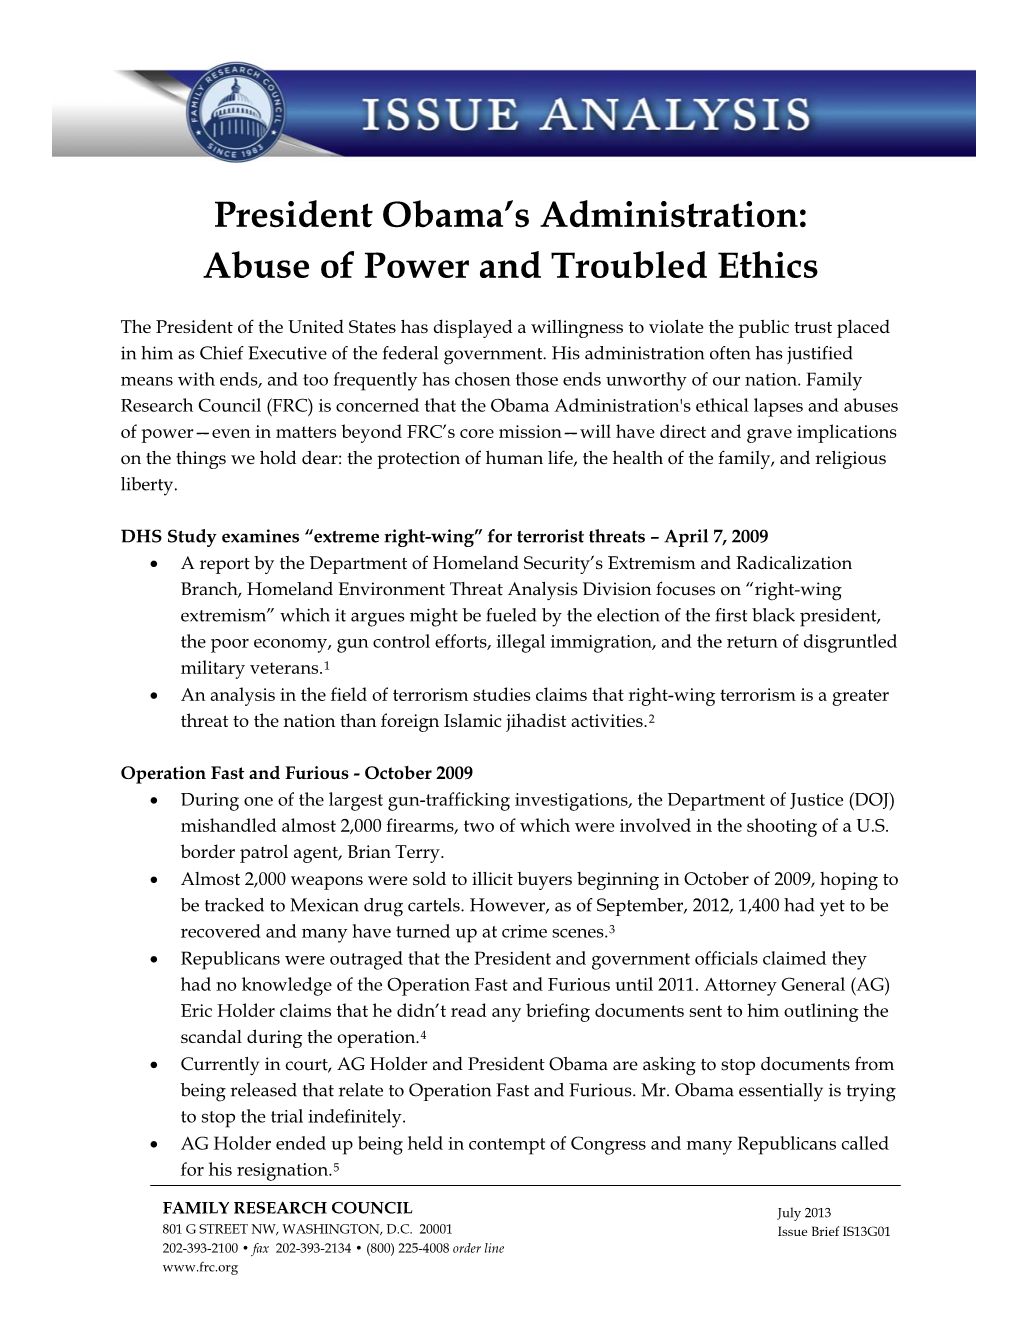 Obama Administration